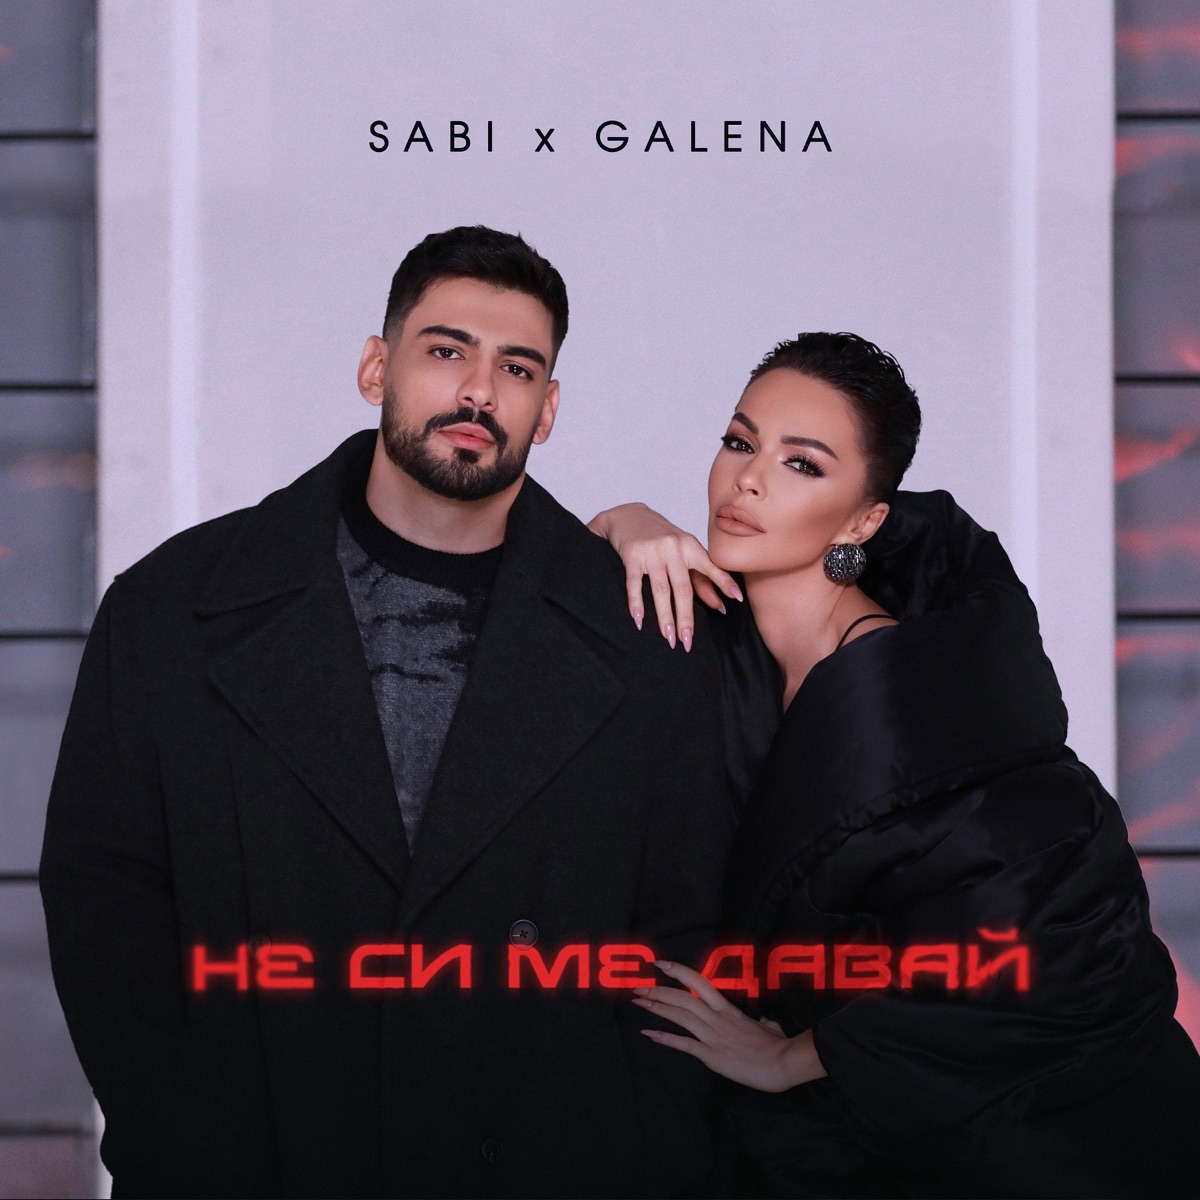 Scandal - Single by Galena & Medi on Apple Music